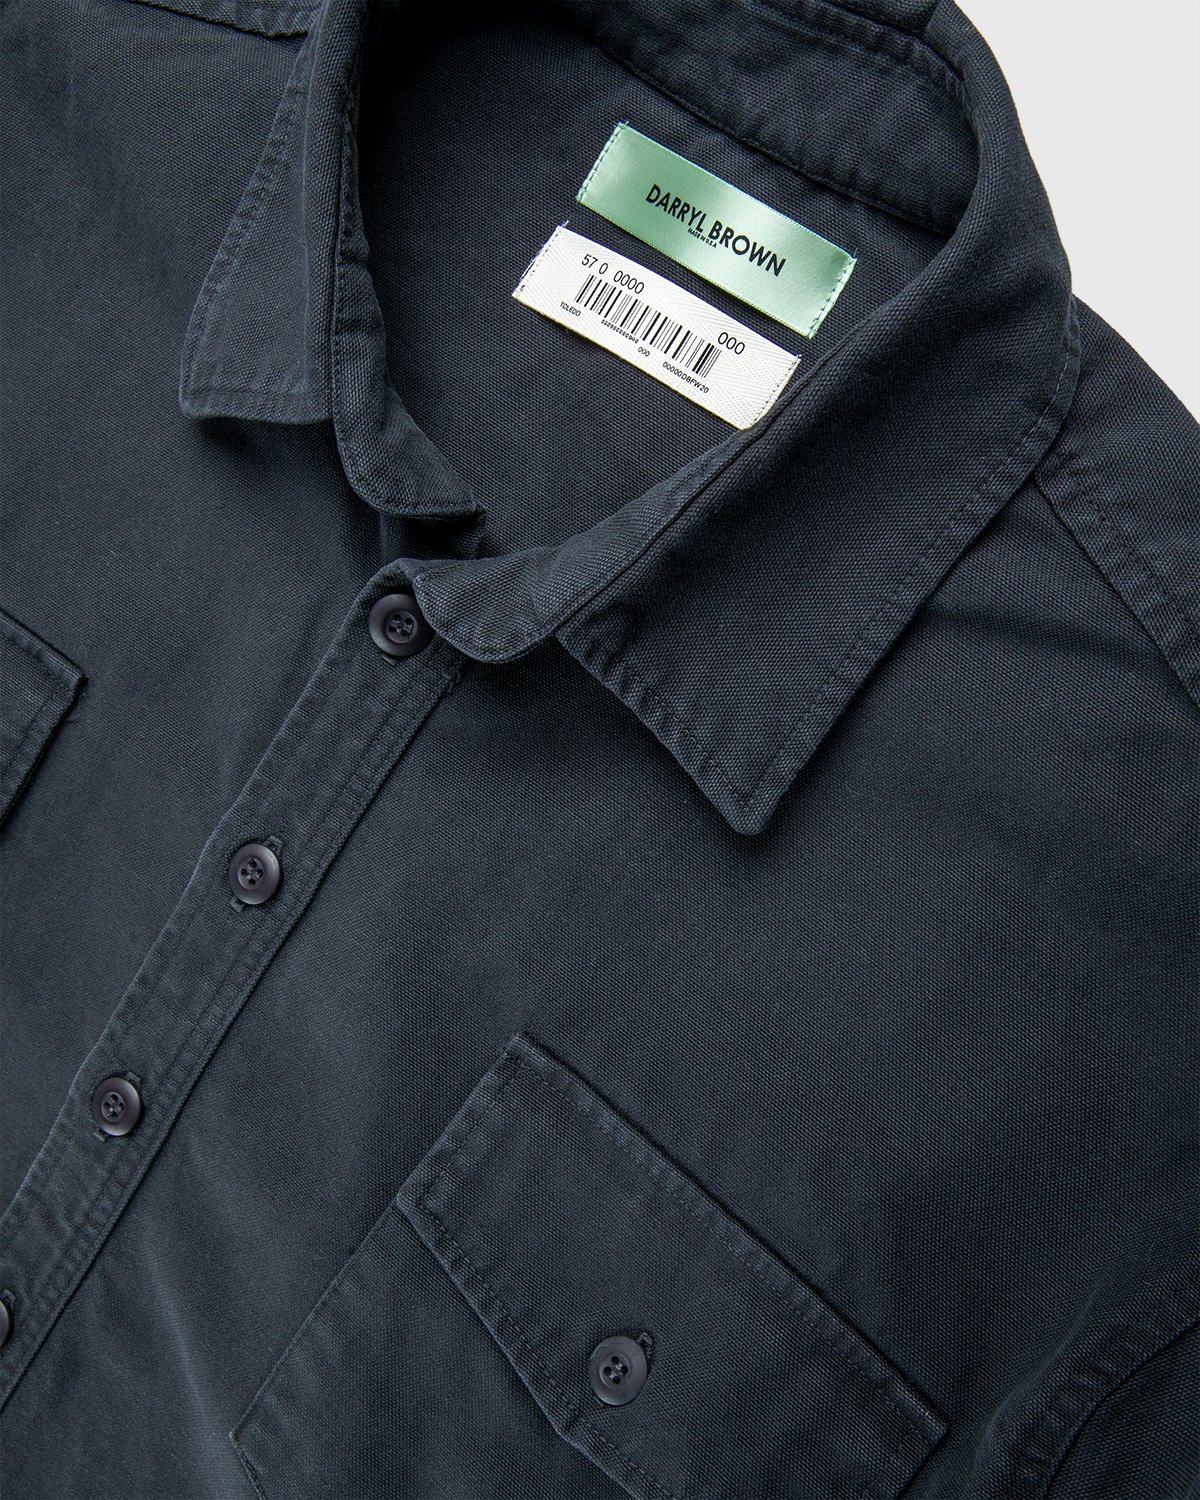 Darryl Brown - Military Work Shirt Vintage Black - Clothing - Black - Image 3